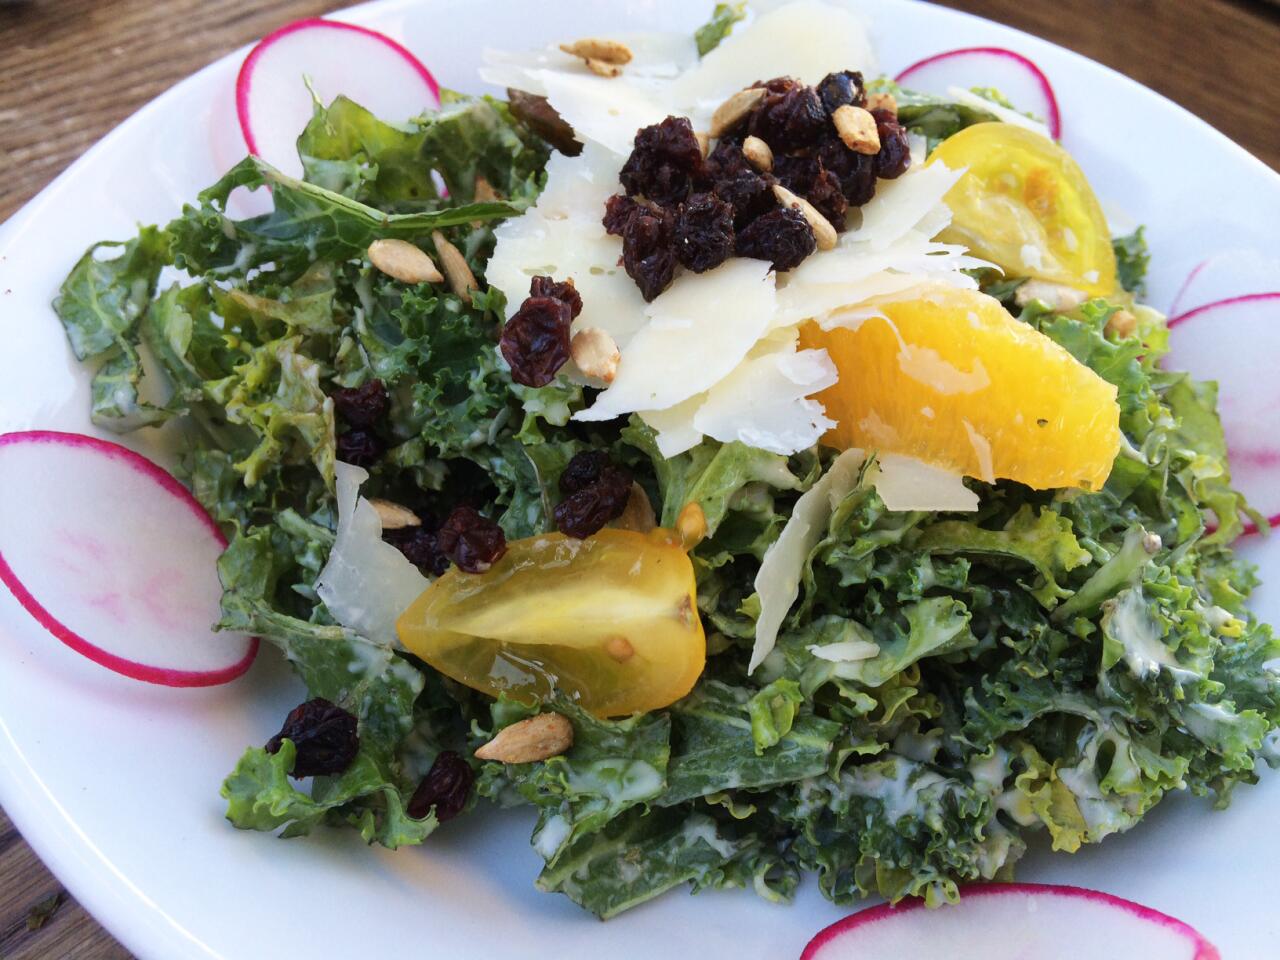 The kale salad features lemon tahini dressing, Parmesan cheese, sunflower seeds, tomato, orange segments and currants.